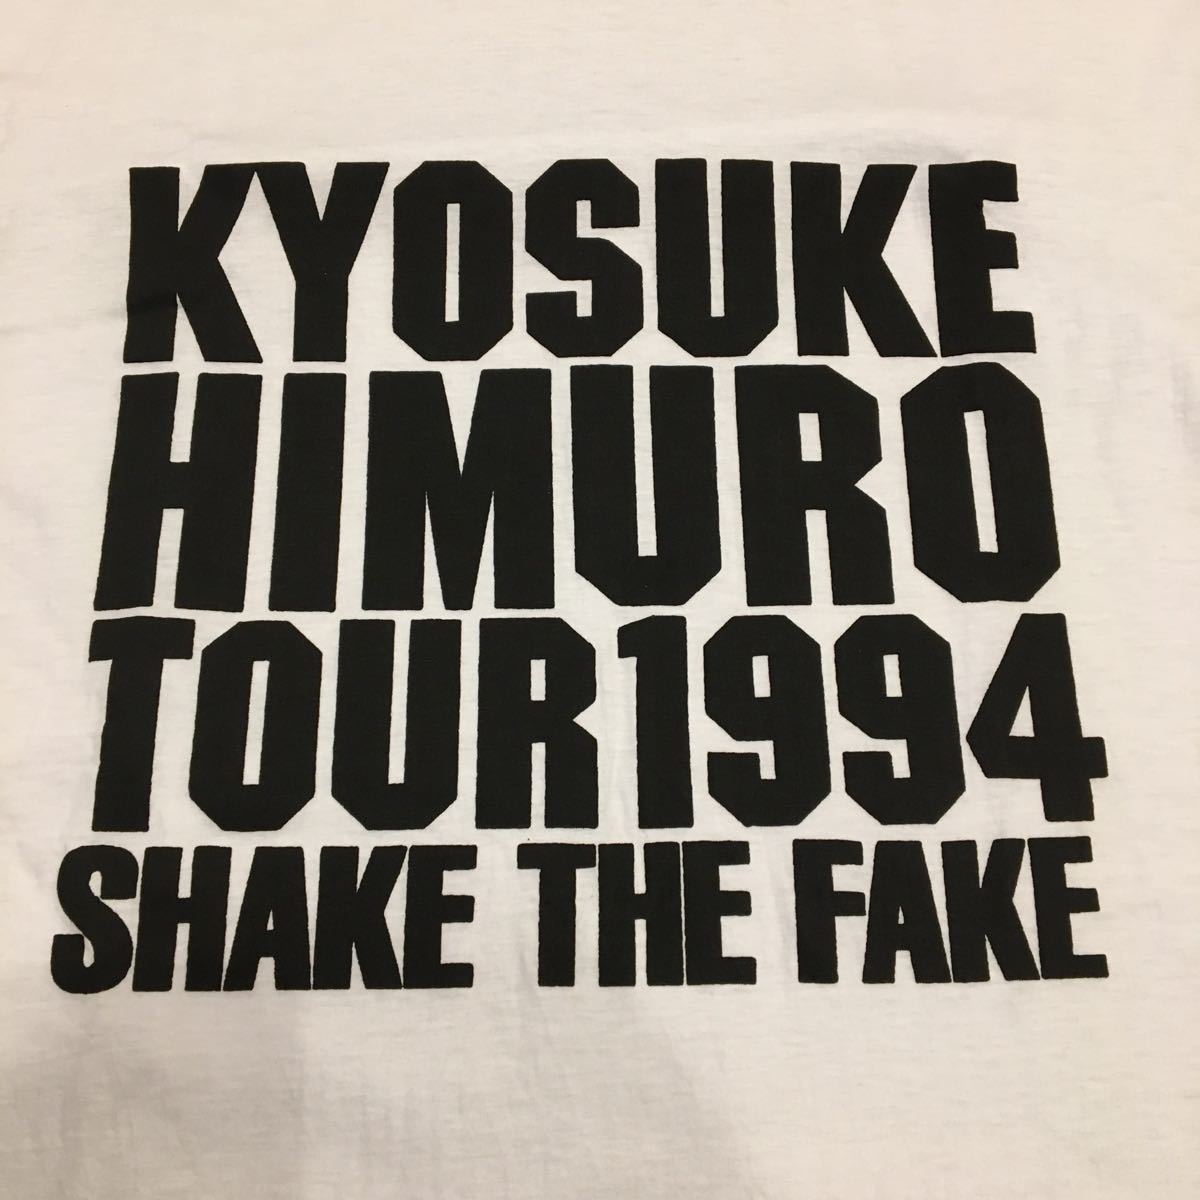  не использовался редкость Himuro Kyosuke SHAKE THE FAKE TOUR 1994 футболка L размер 